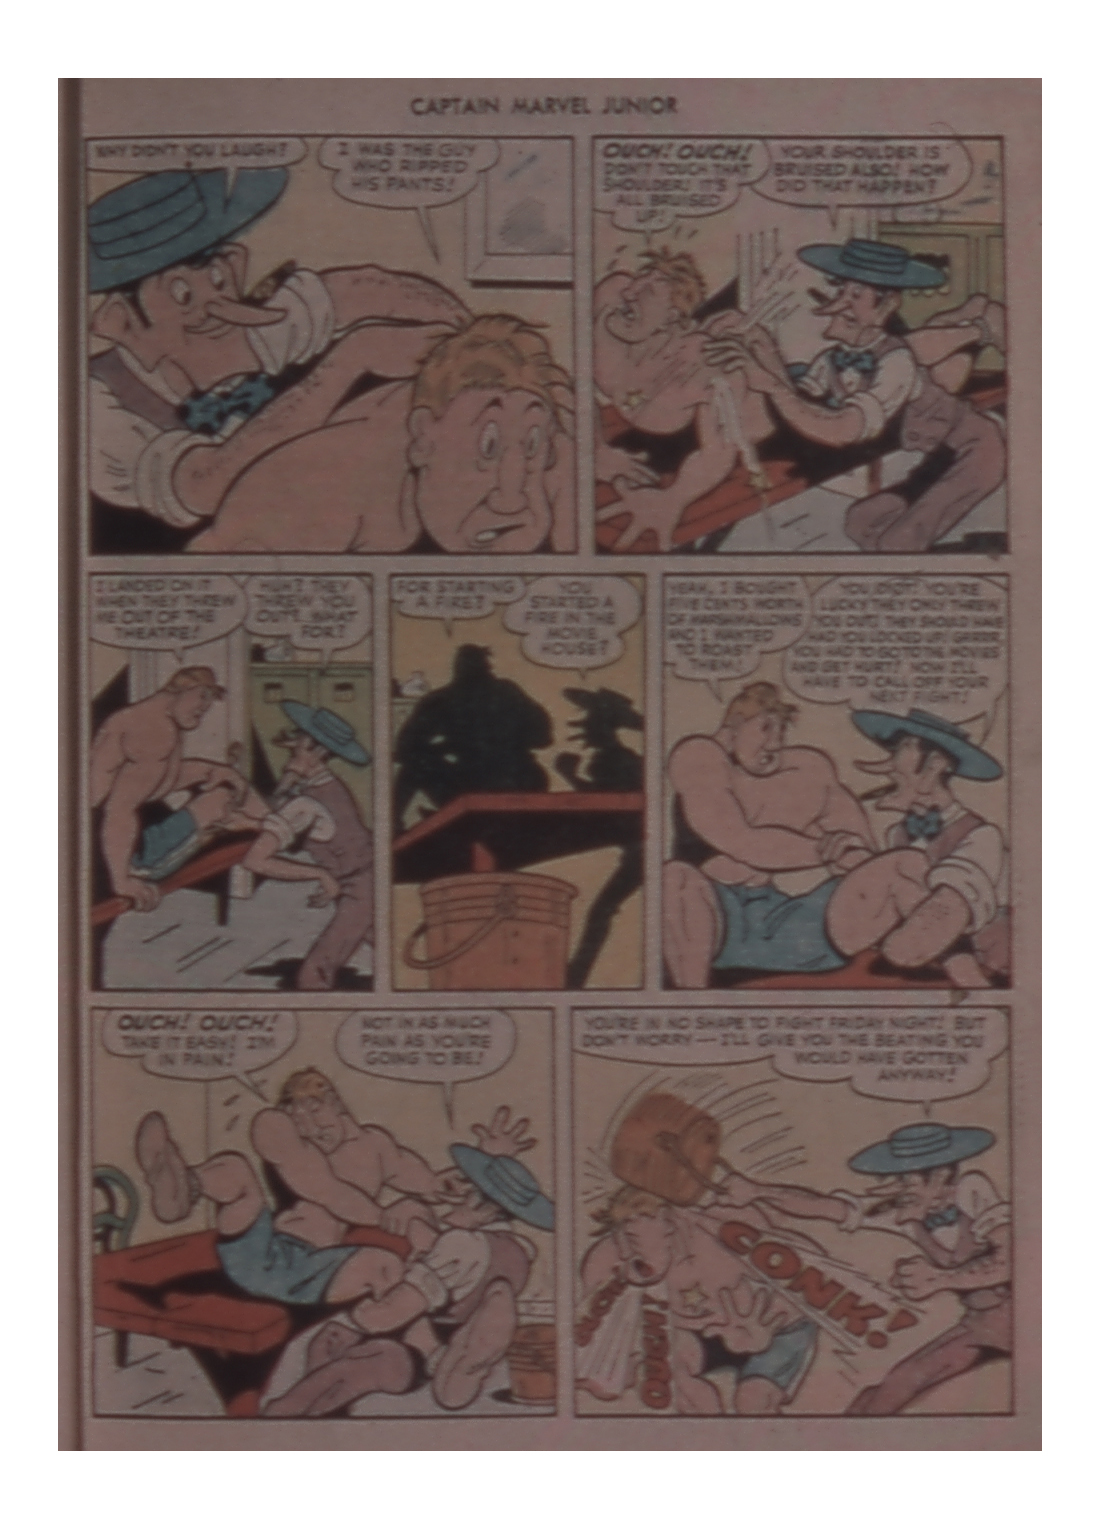 Read online Captain Marvel, Jr. comic -  Issue #73 - 37